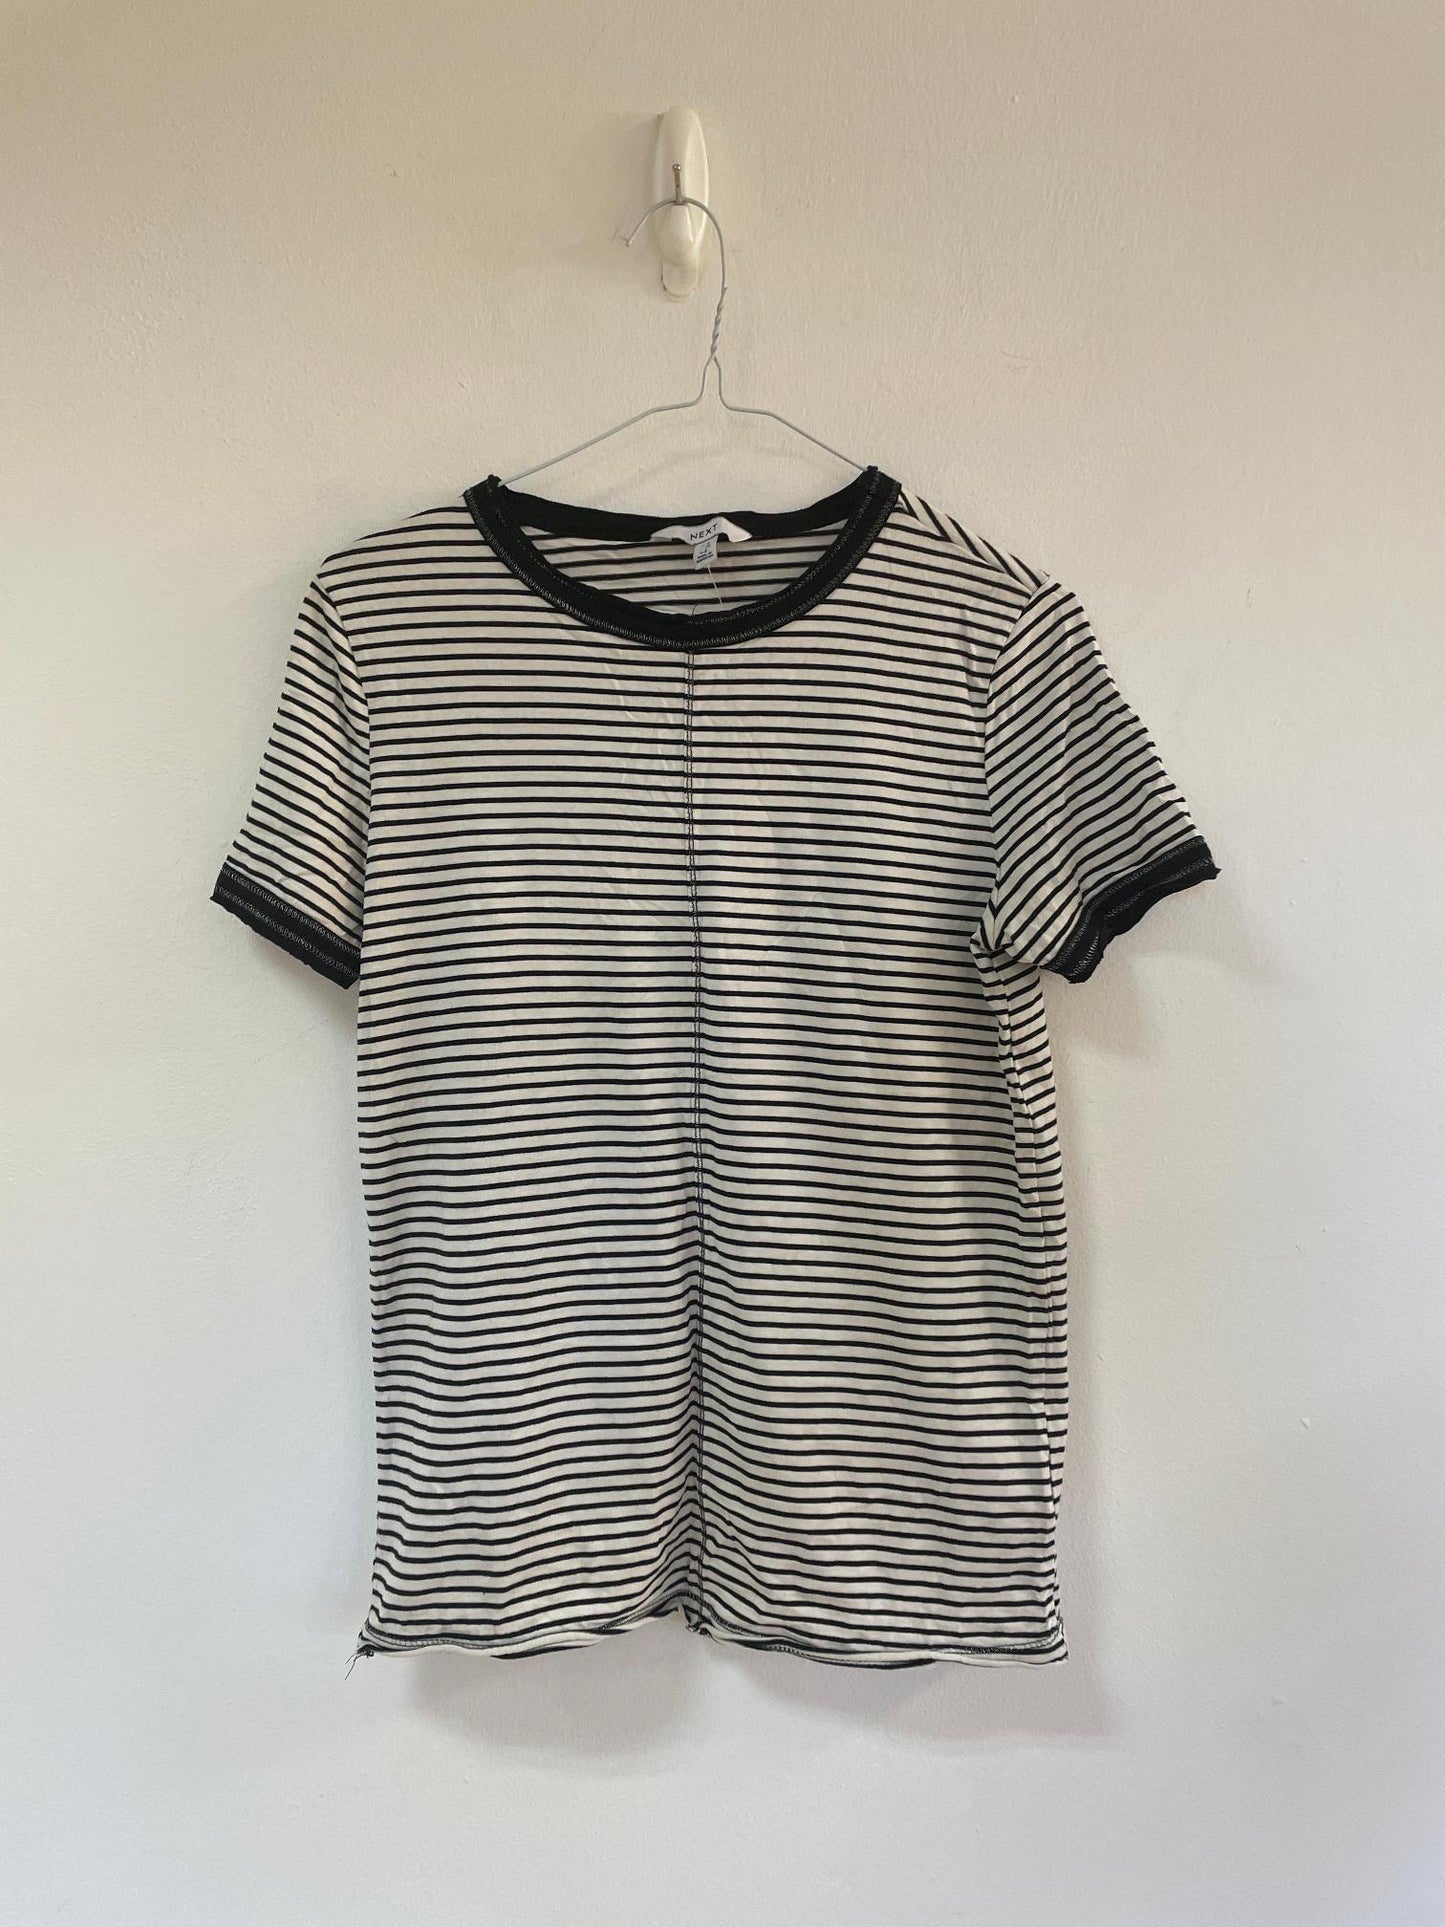 Black and white striped contrast stitch t-shirt, Next, Size 6 (Modal, Cotton)